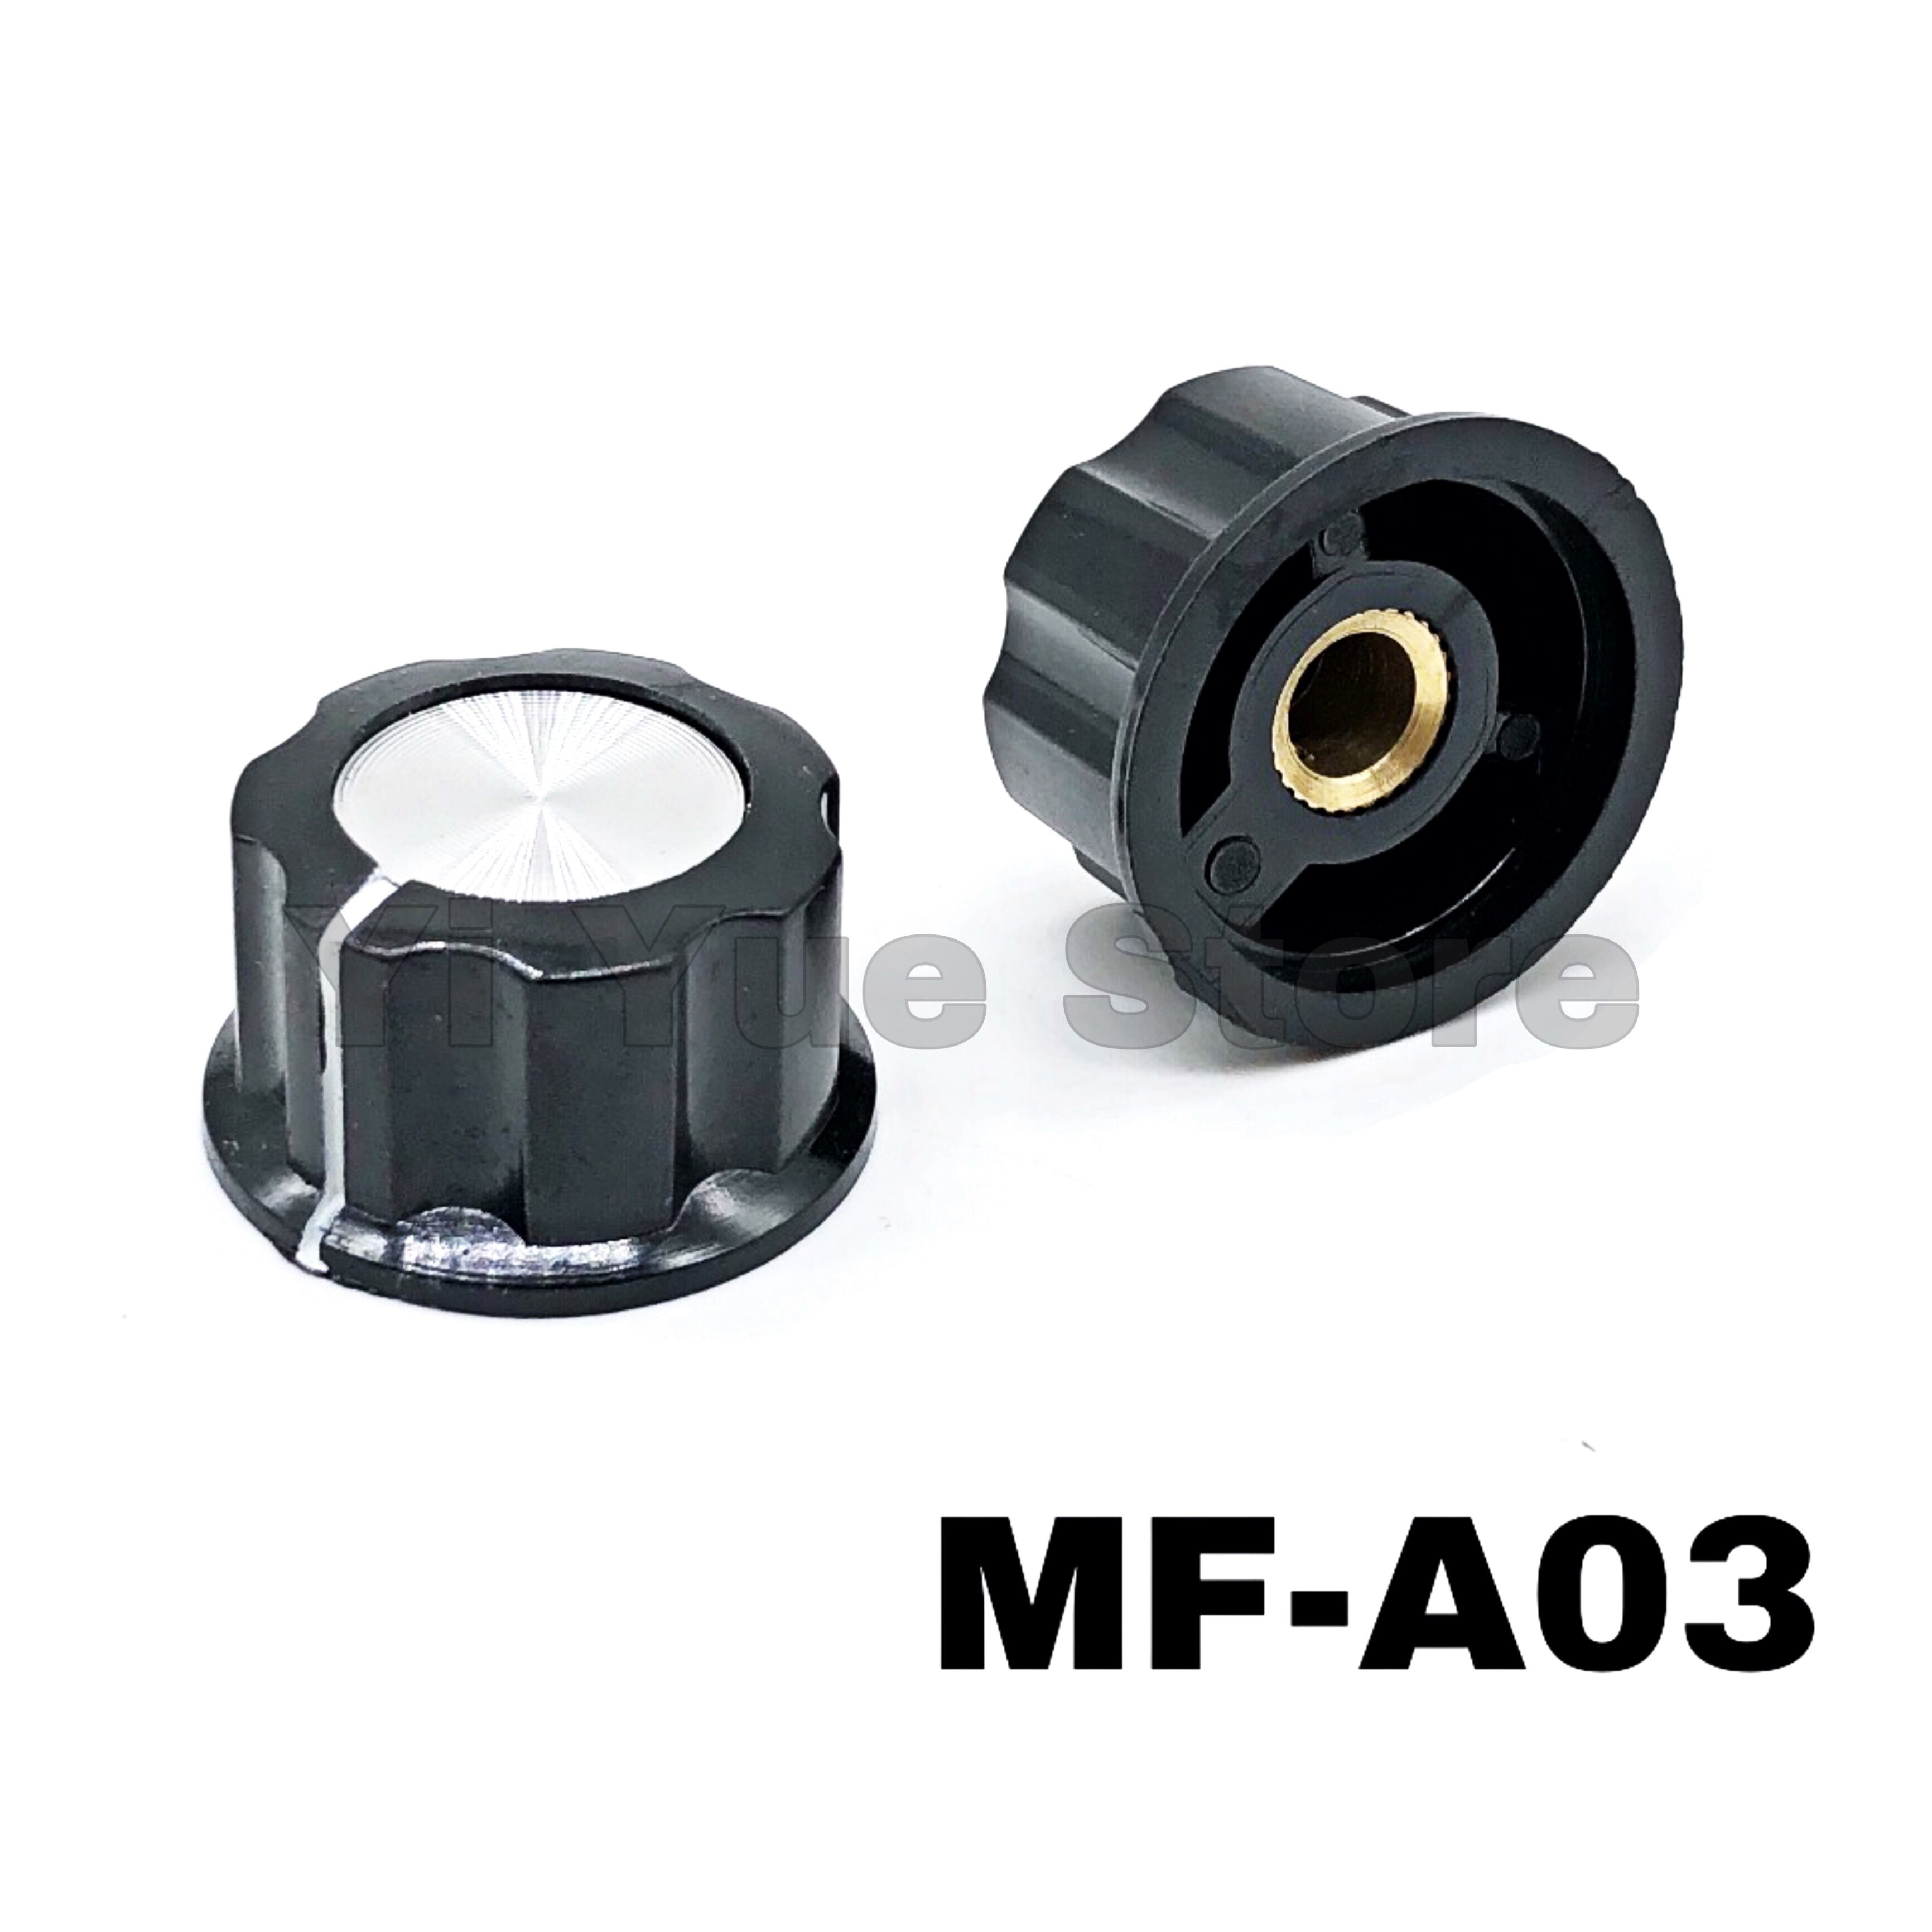 2 stk potentiometer knaphætte 6mm hul mf -a01 mf-a02 mf-a03 mf-a04 mf-a05 drejeknapper hætter med 118 wx050: Mf -a03